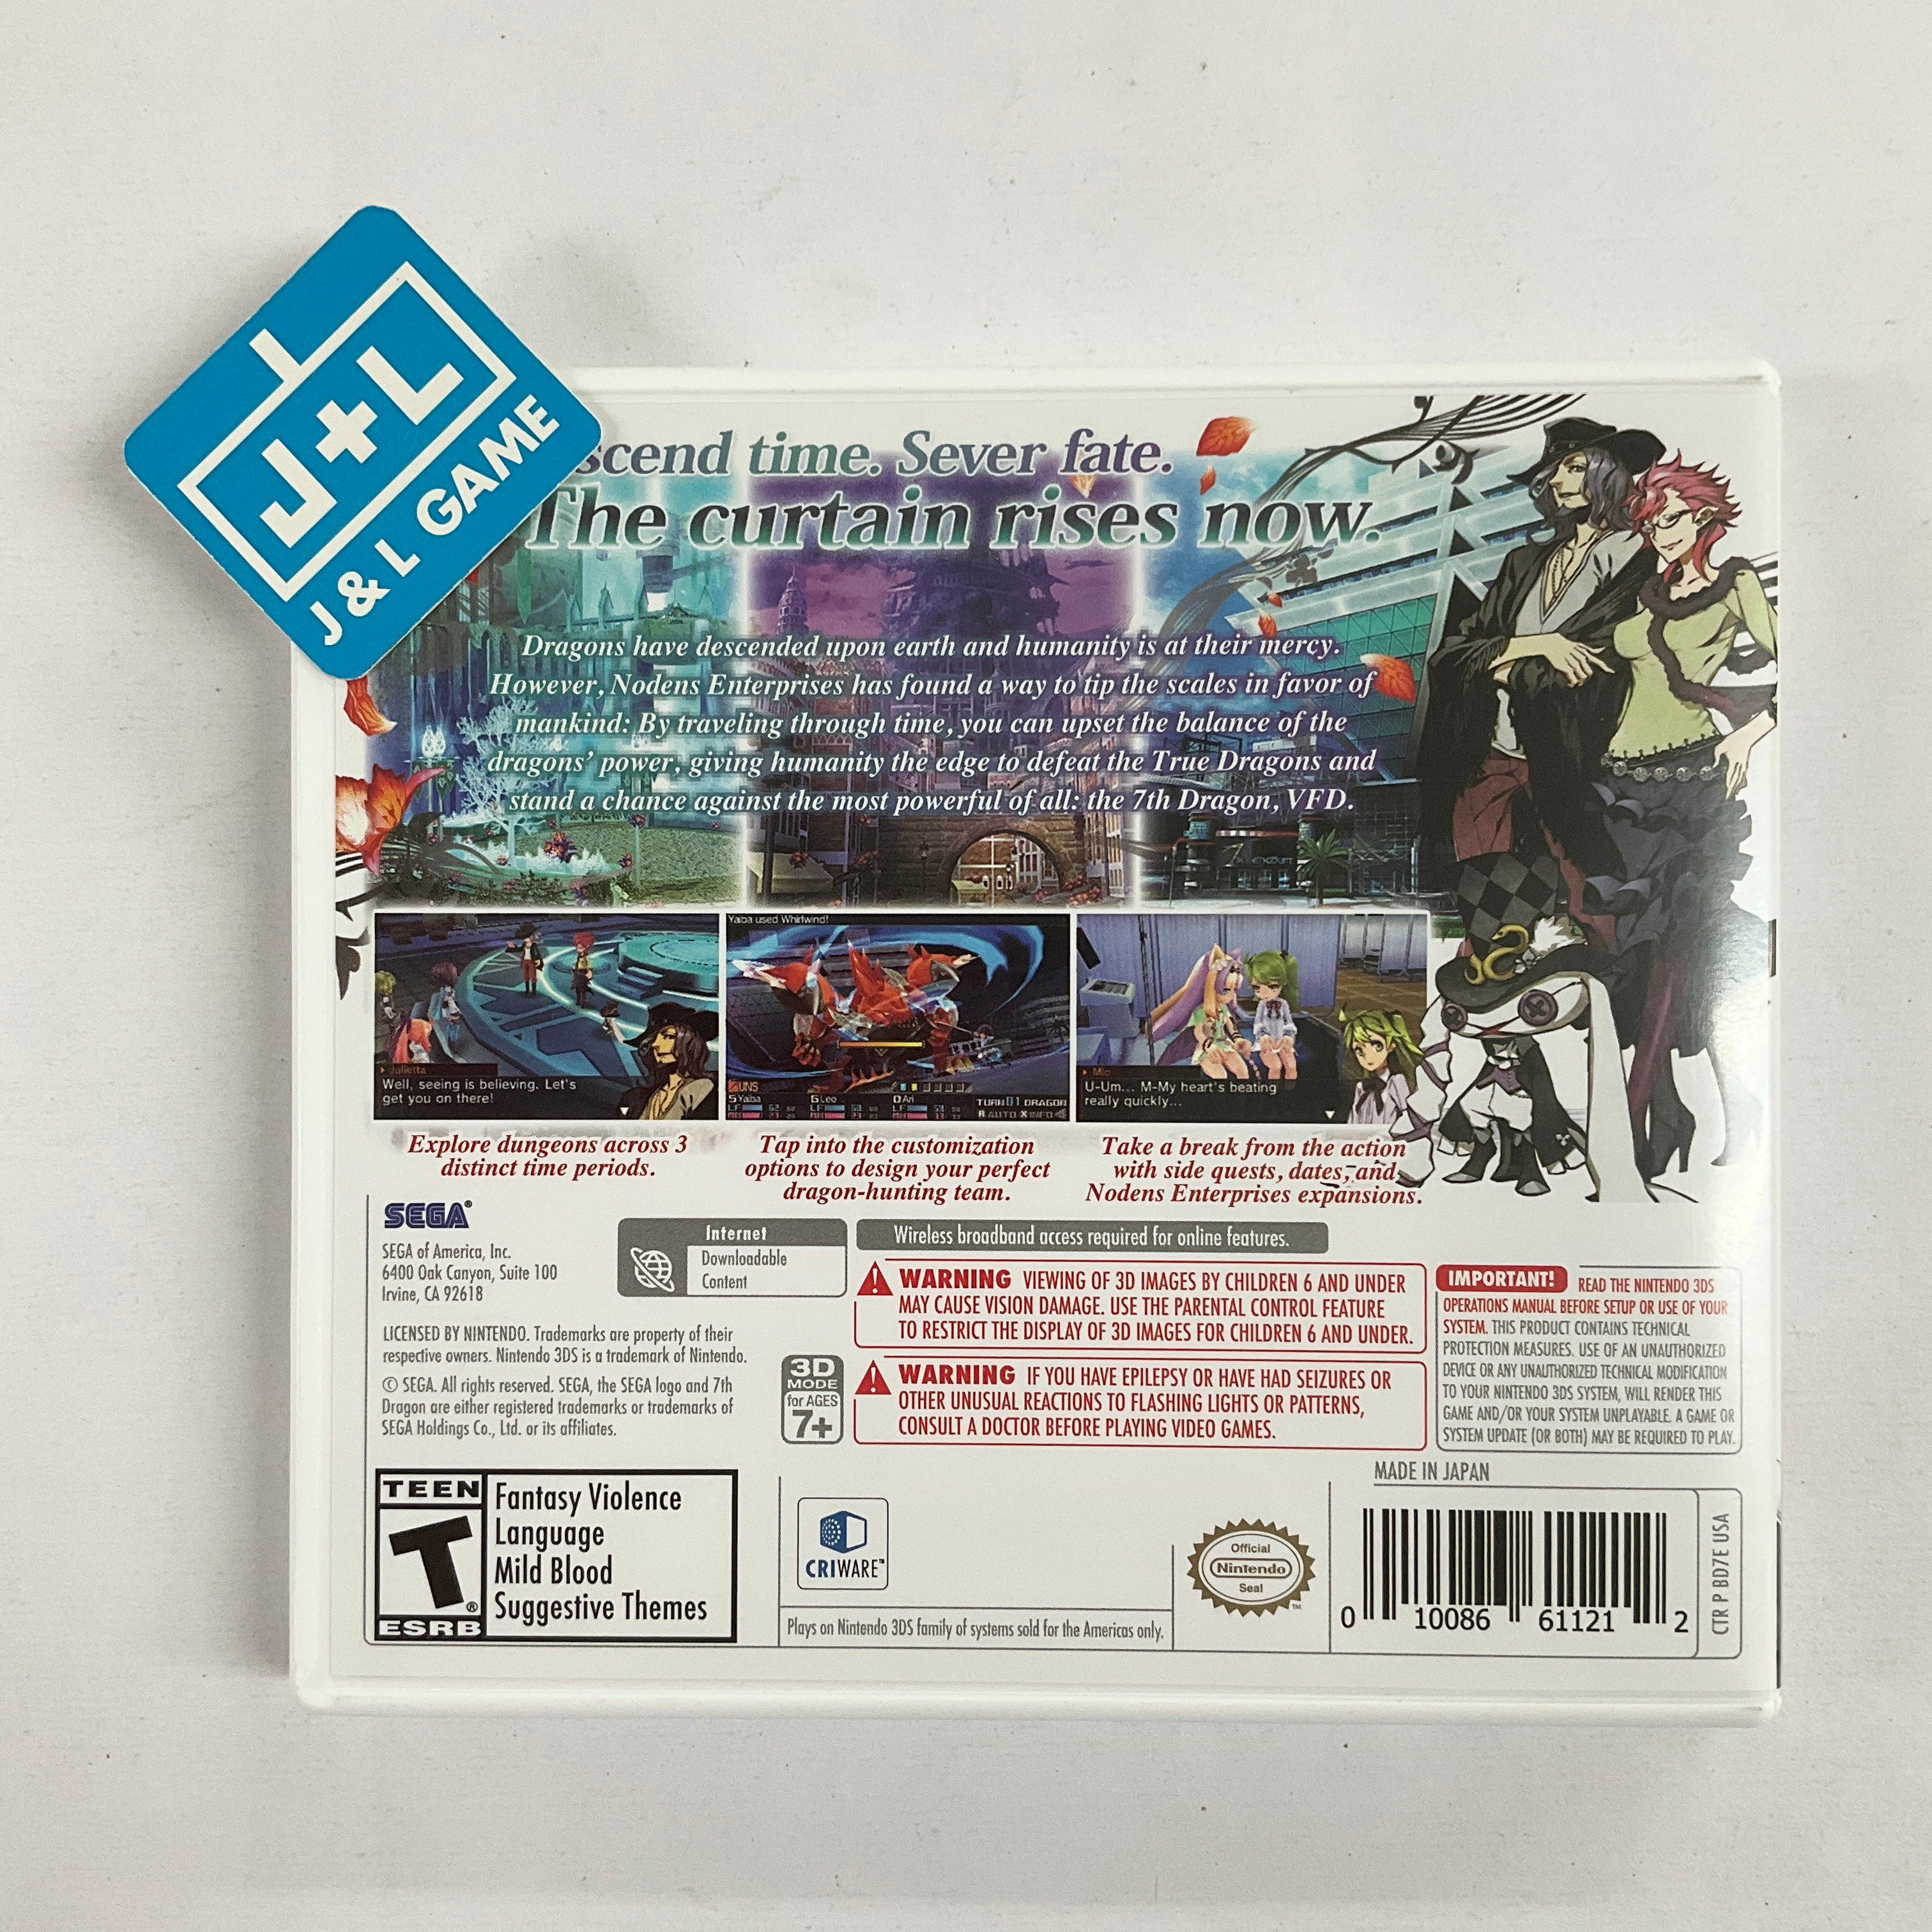 7th Dragon III Code: VFD (Launch Edition) - Nintendo 3DS [Pre-Owned] Video Games Sega   